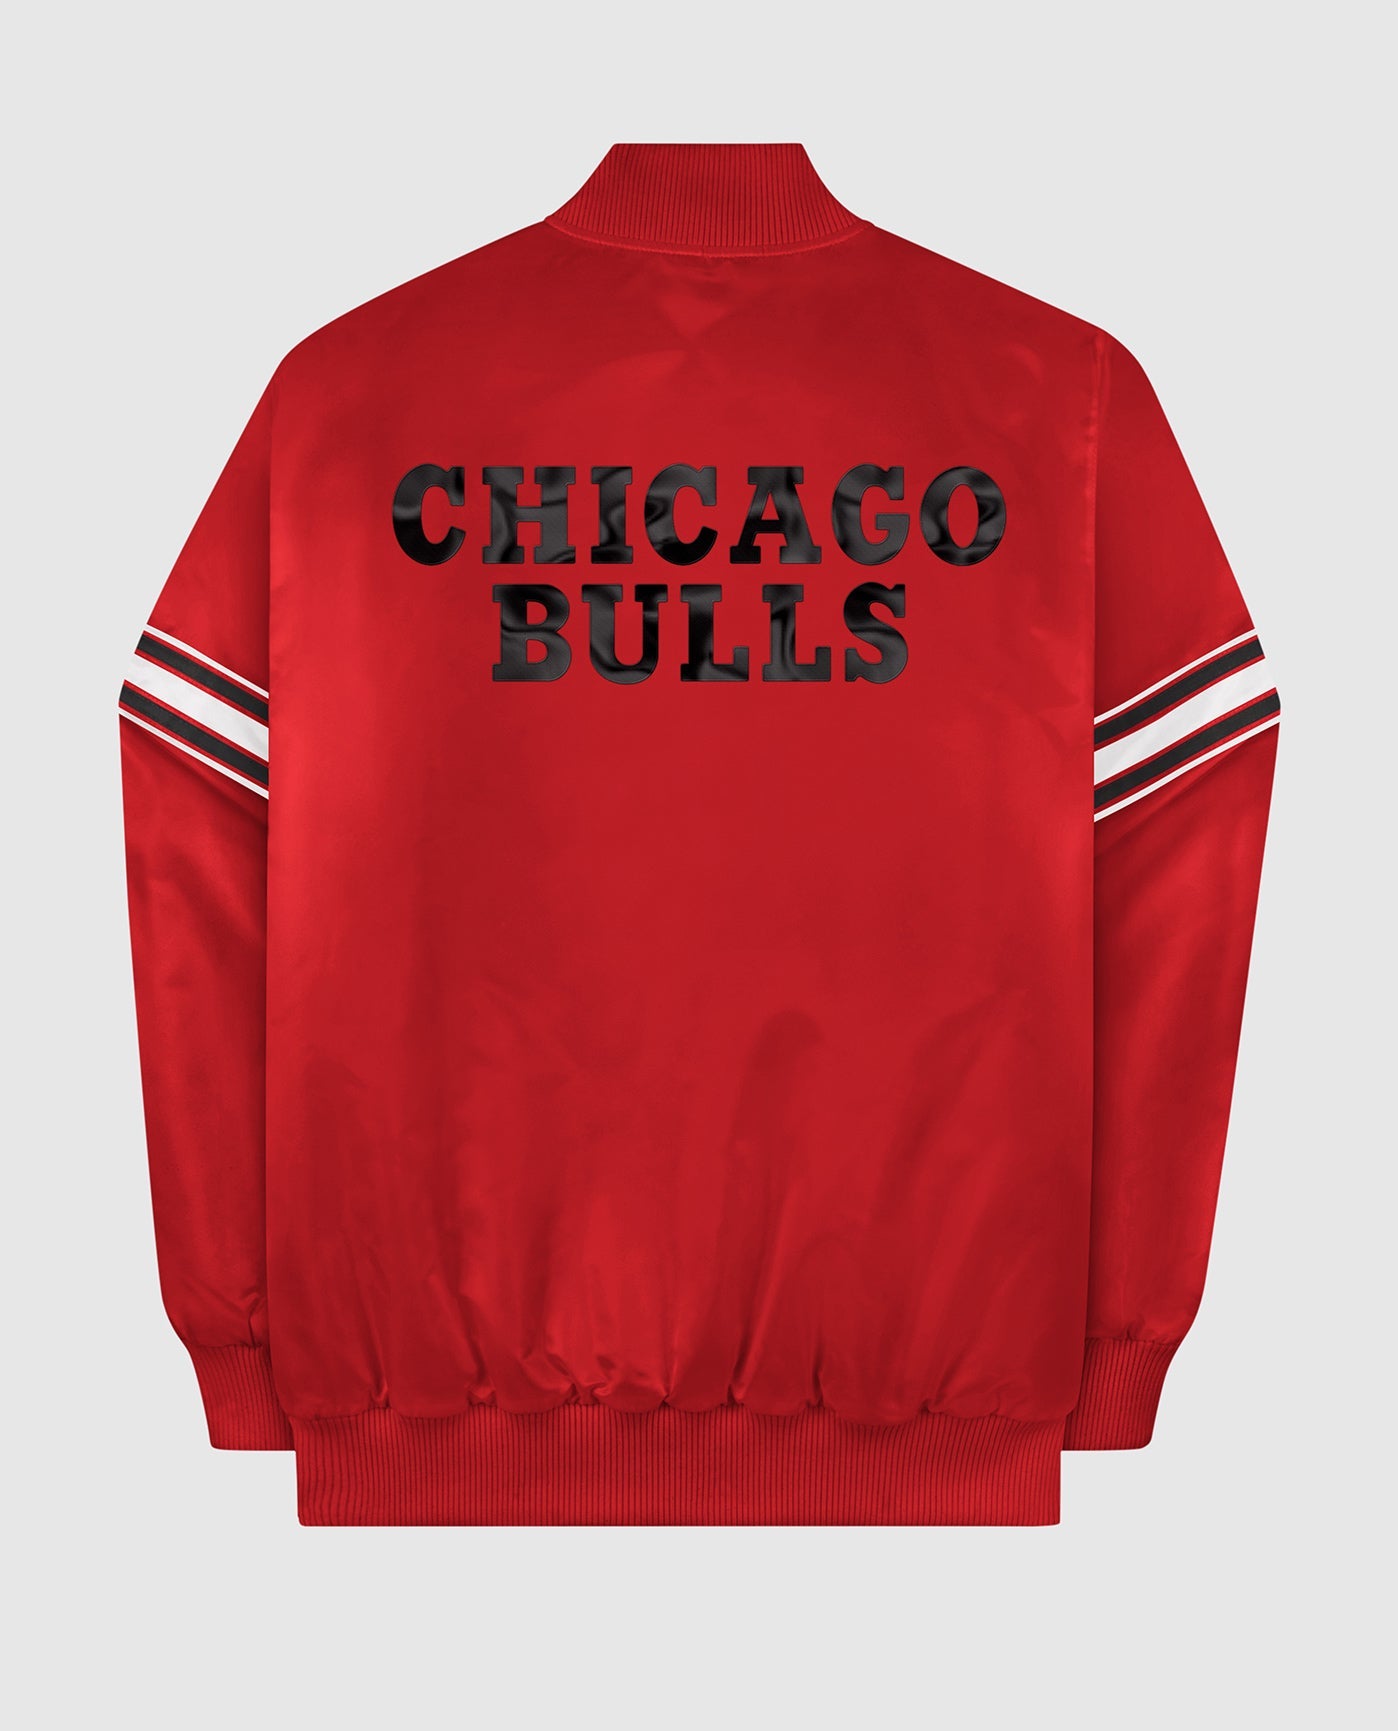 Unisex Chicago bulls logo baseball varsity jacket red body and